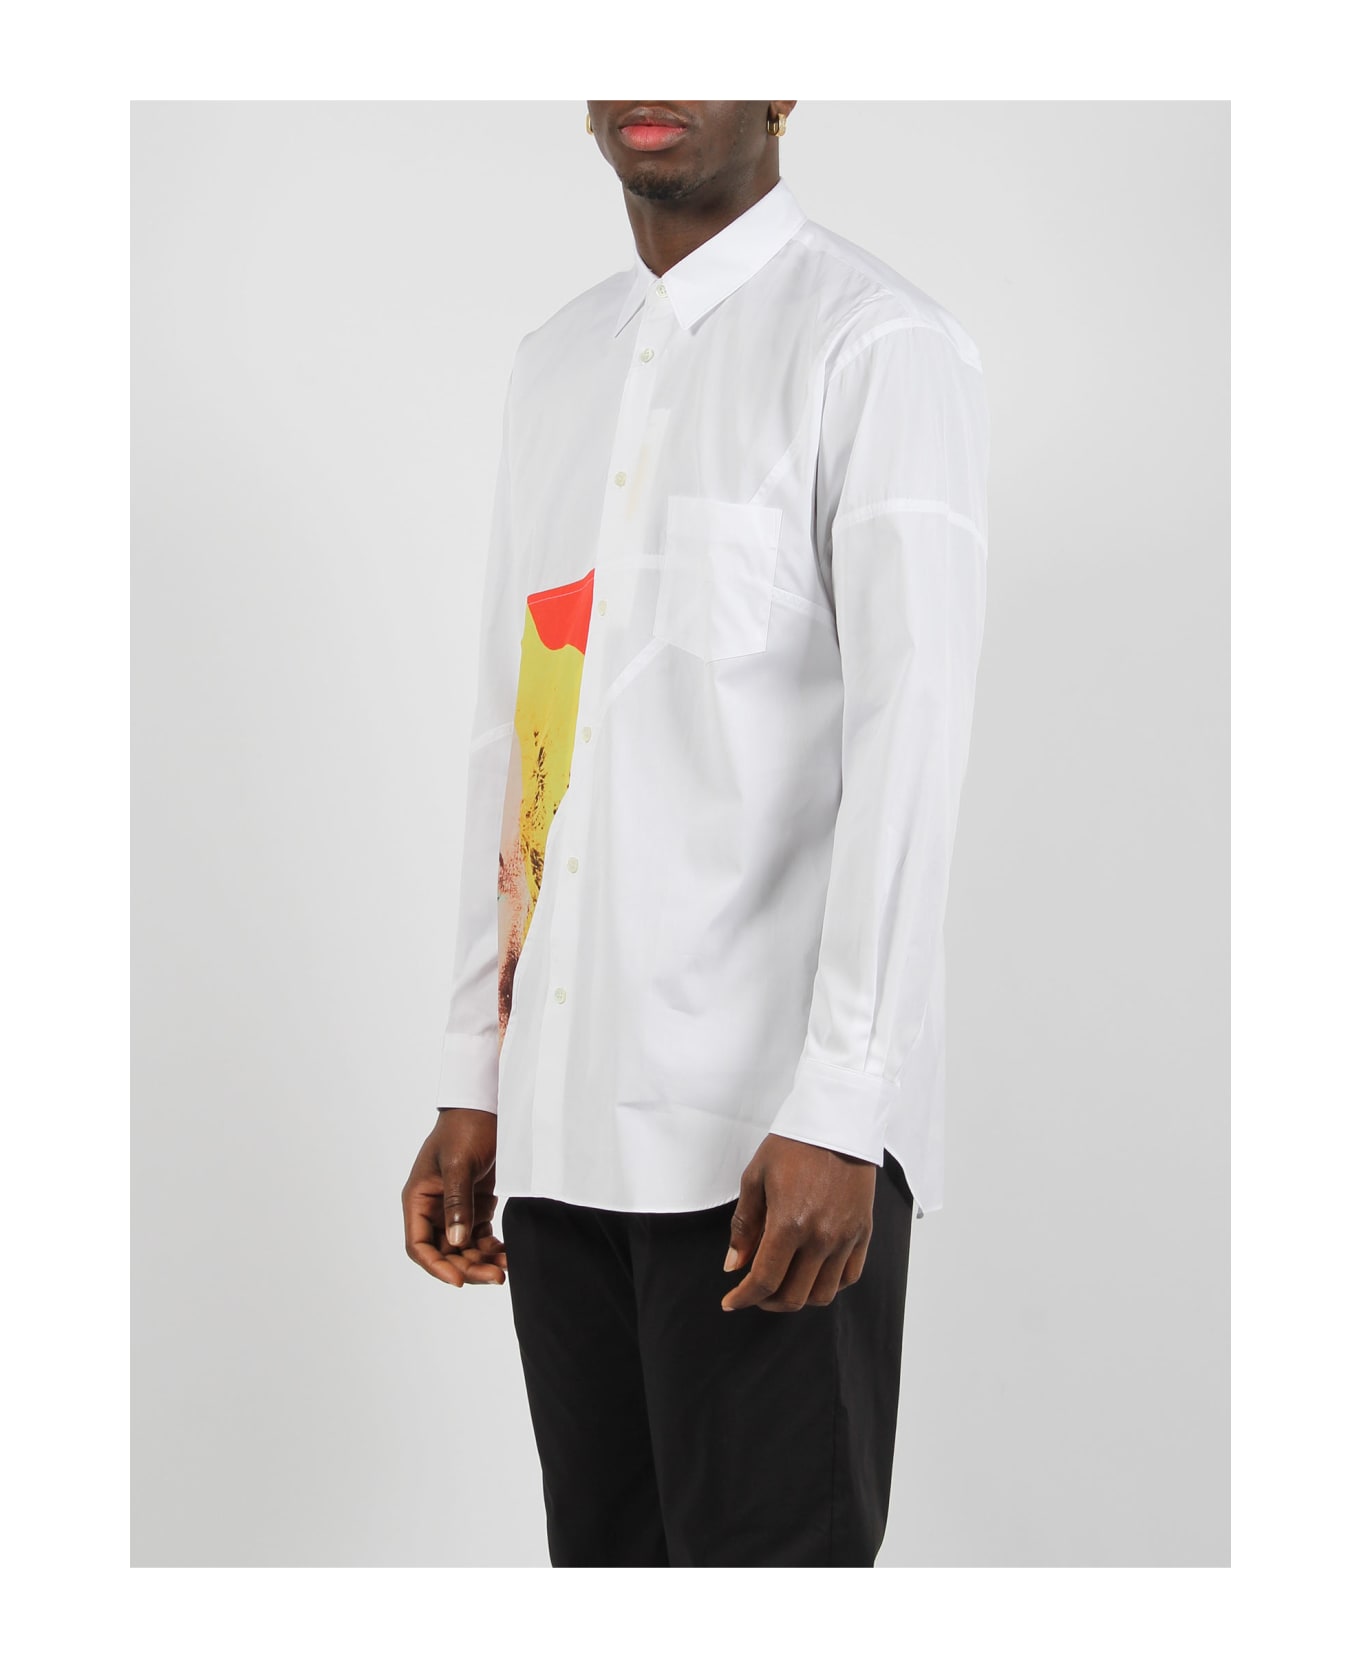 Comme des Garçons Shirt Andy Warhol Shirt - White シャツ